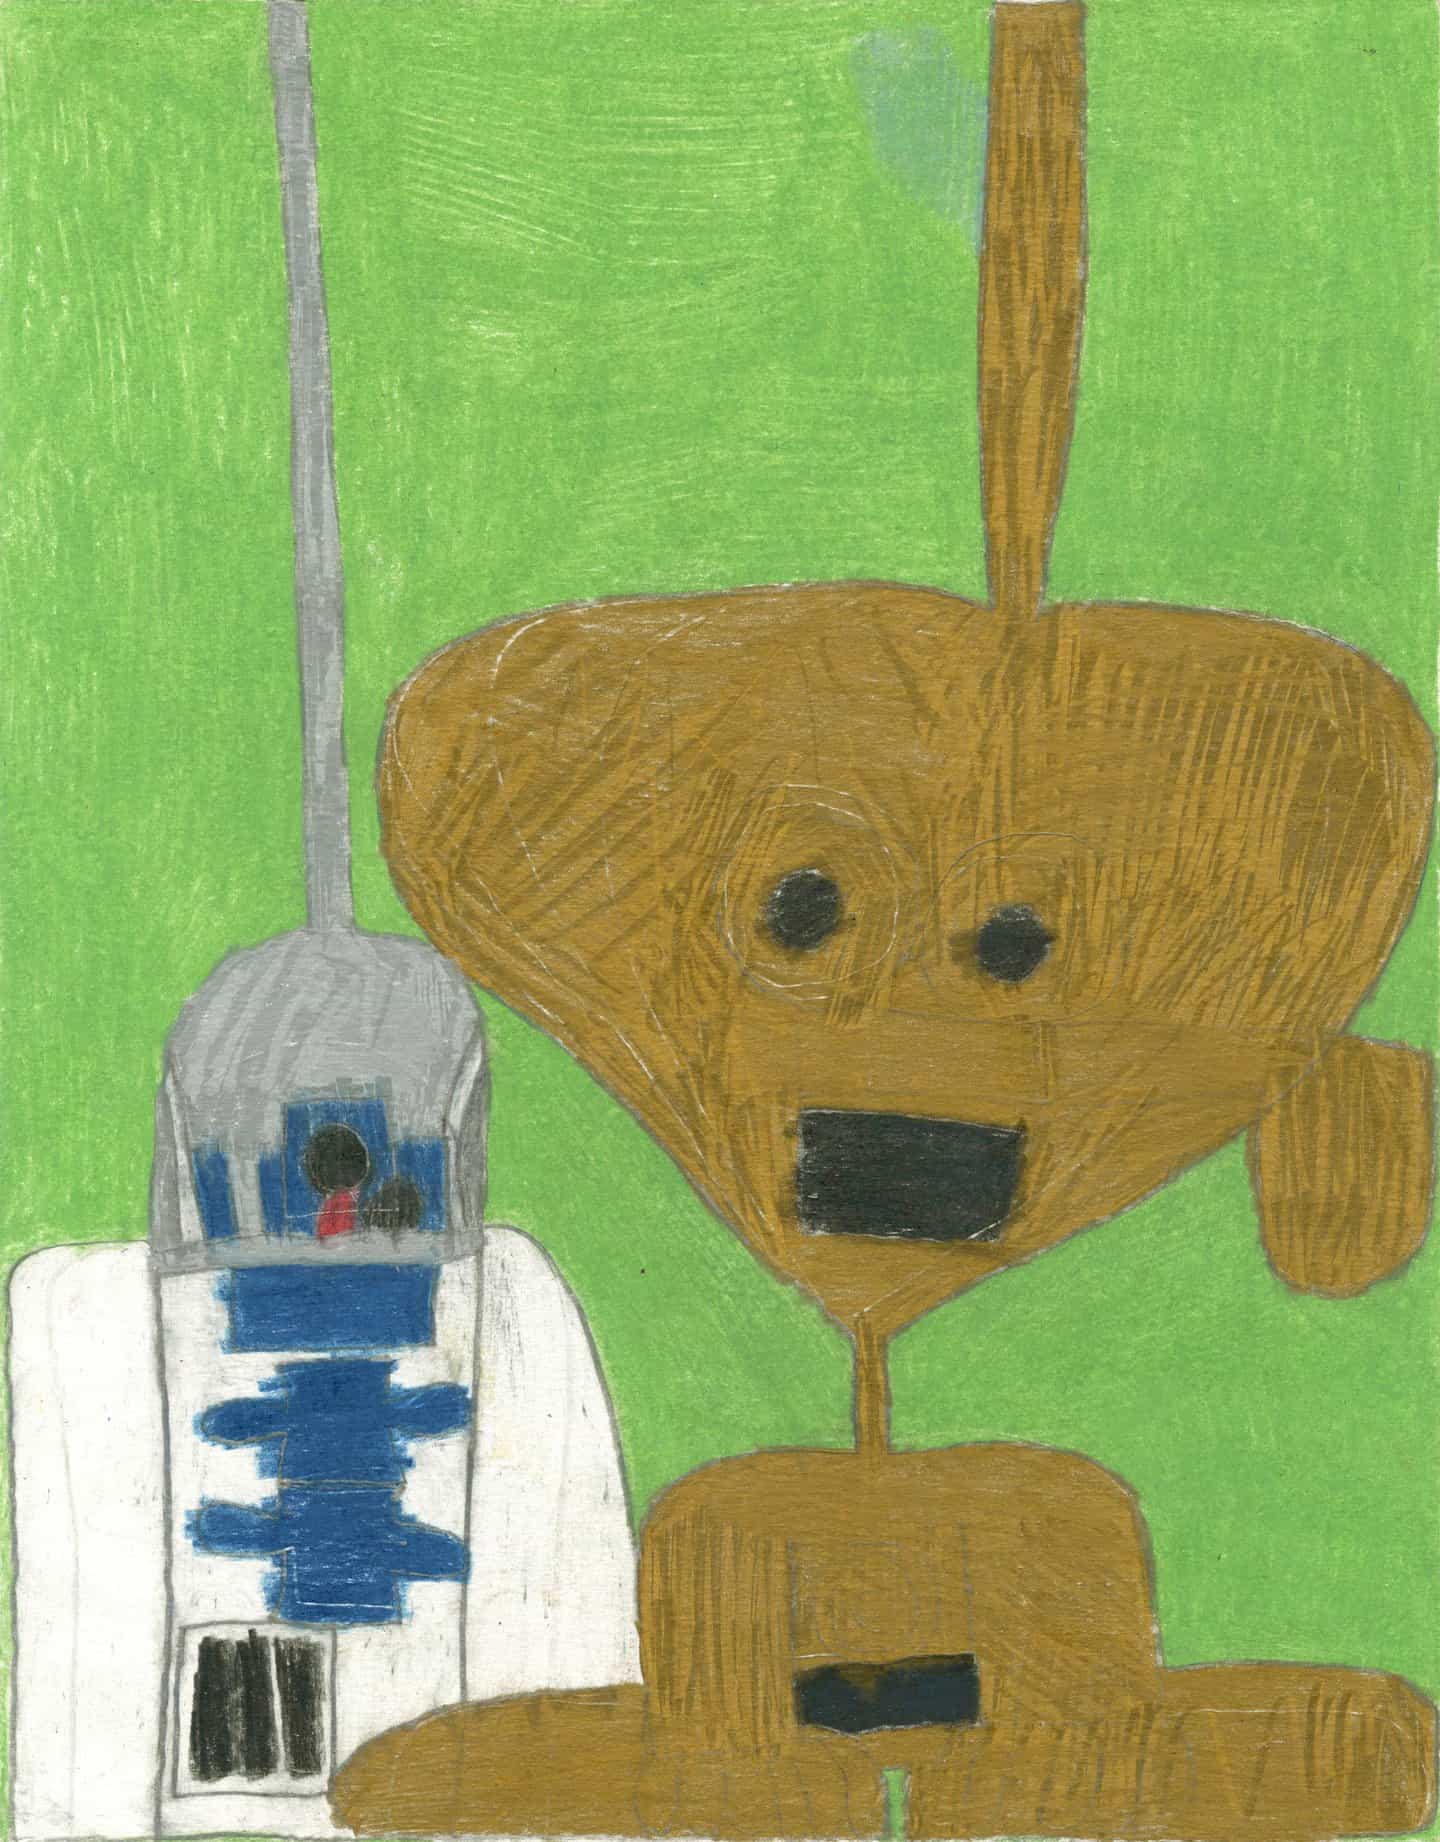 The Royal Tenenbaums, R2-D2, Iron Man: Anthony Coleman dibuja todos tus favoritos